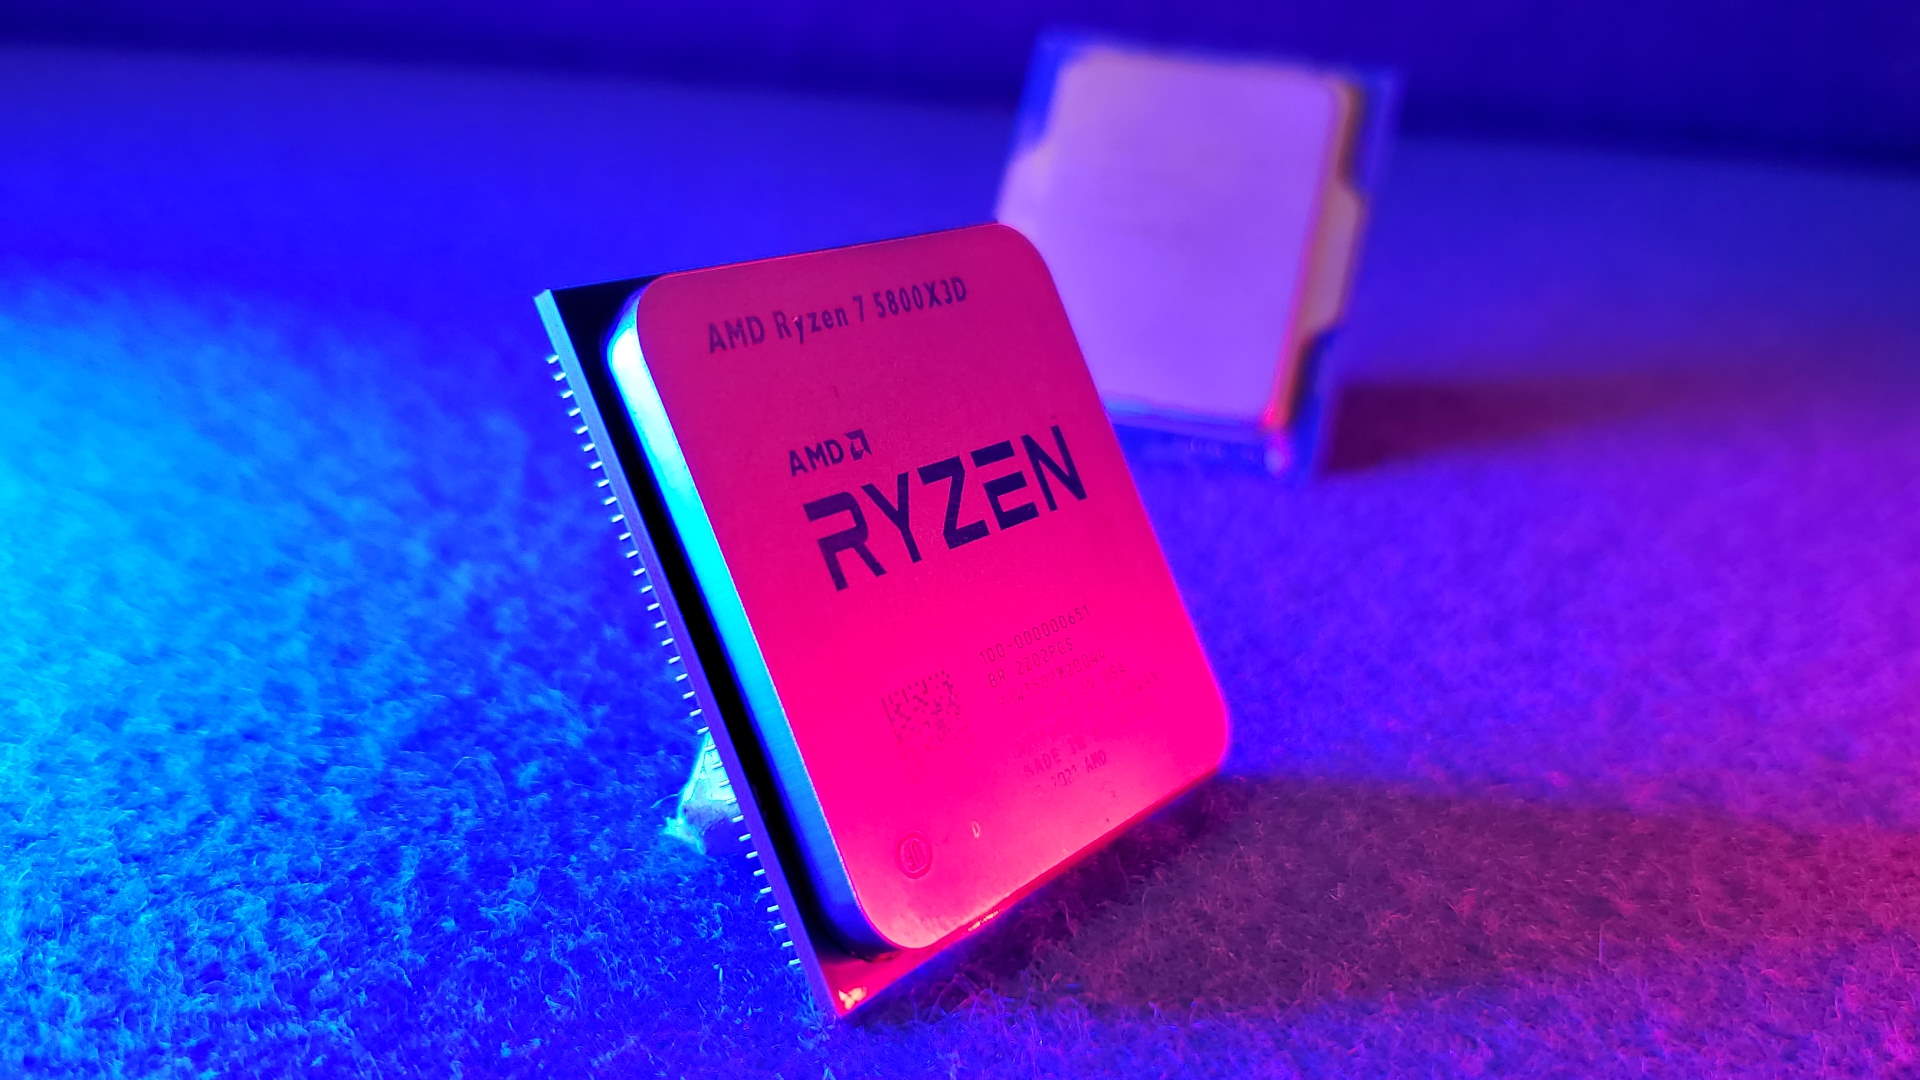 Processeur AMD Ryzen 7 5800X3D